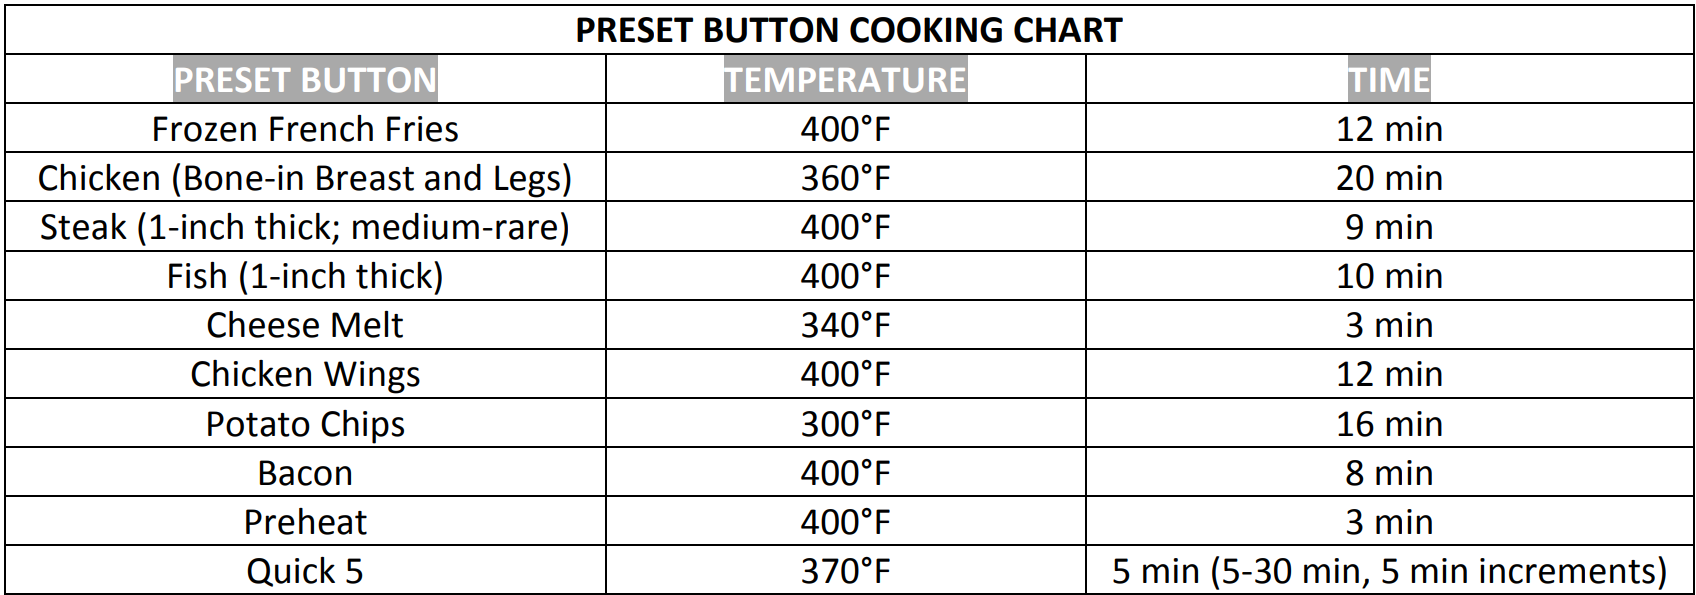 Cook's Essentials CM1708 Air Fryer 4